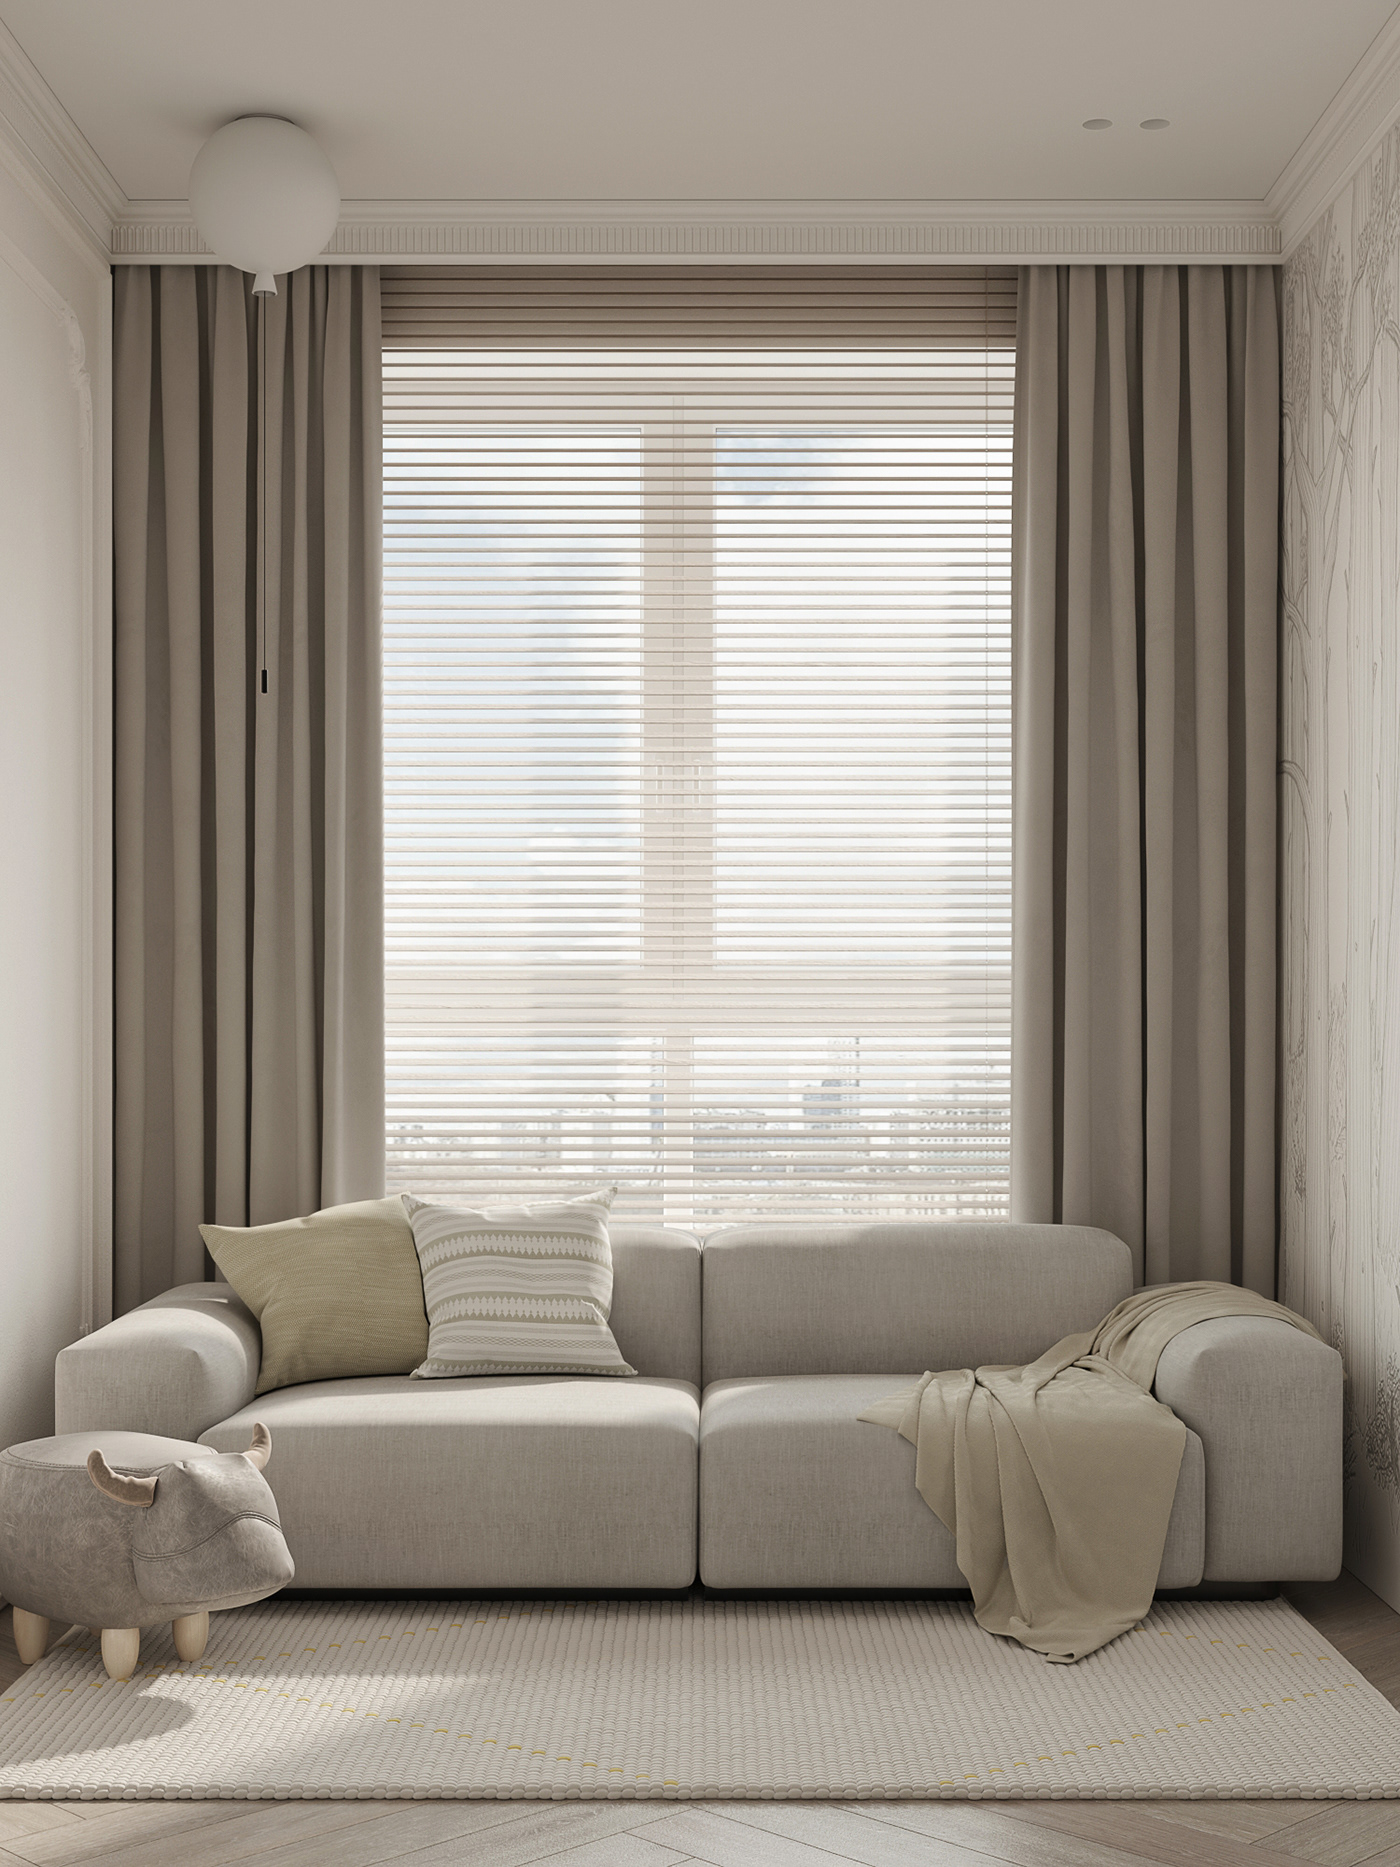 corona corona render  design Interior interior design  luxury minimalist minimalistic modern visualization